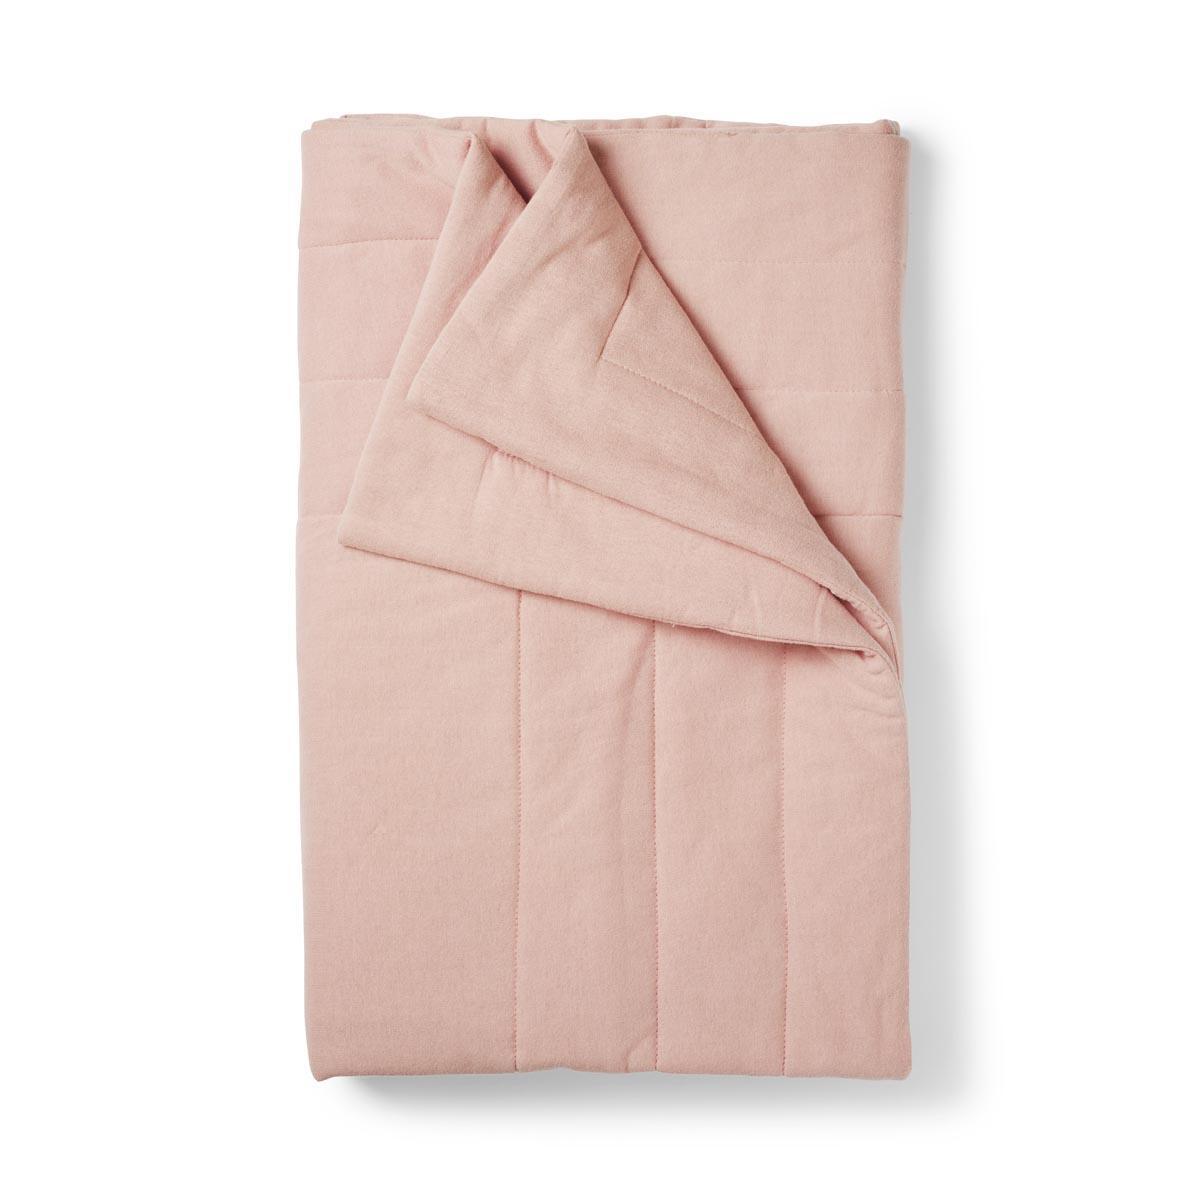 Elodie Details Quilted Blanket 100x100cm, Blushing Pink - Elodie Details